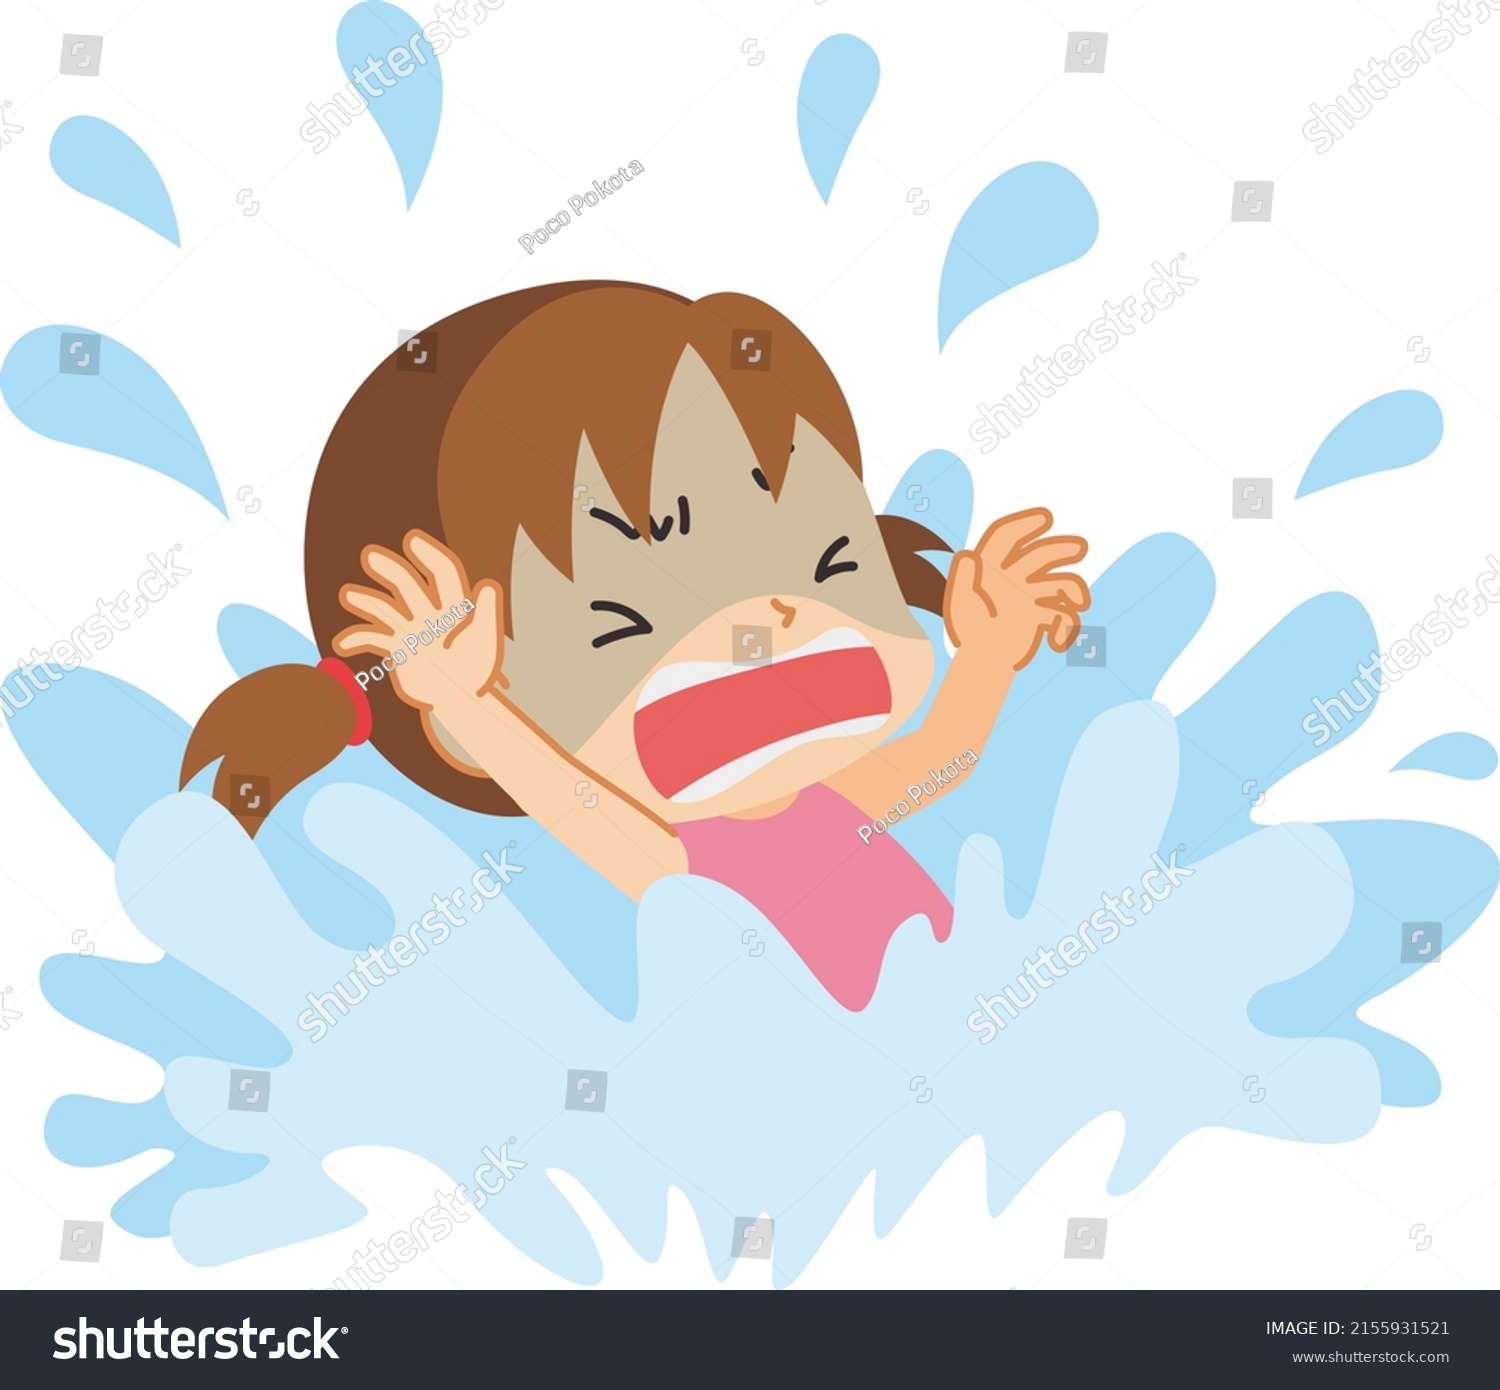 1,024 Cartoon Girl Drowning Images, Stock Photos & Vectors | Shutterstock